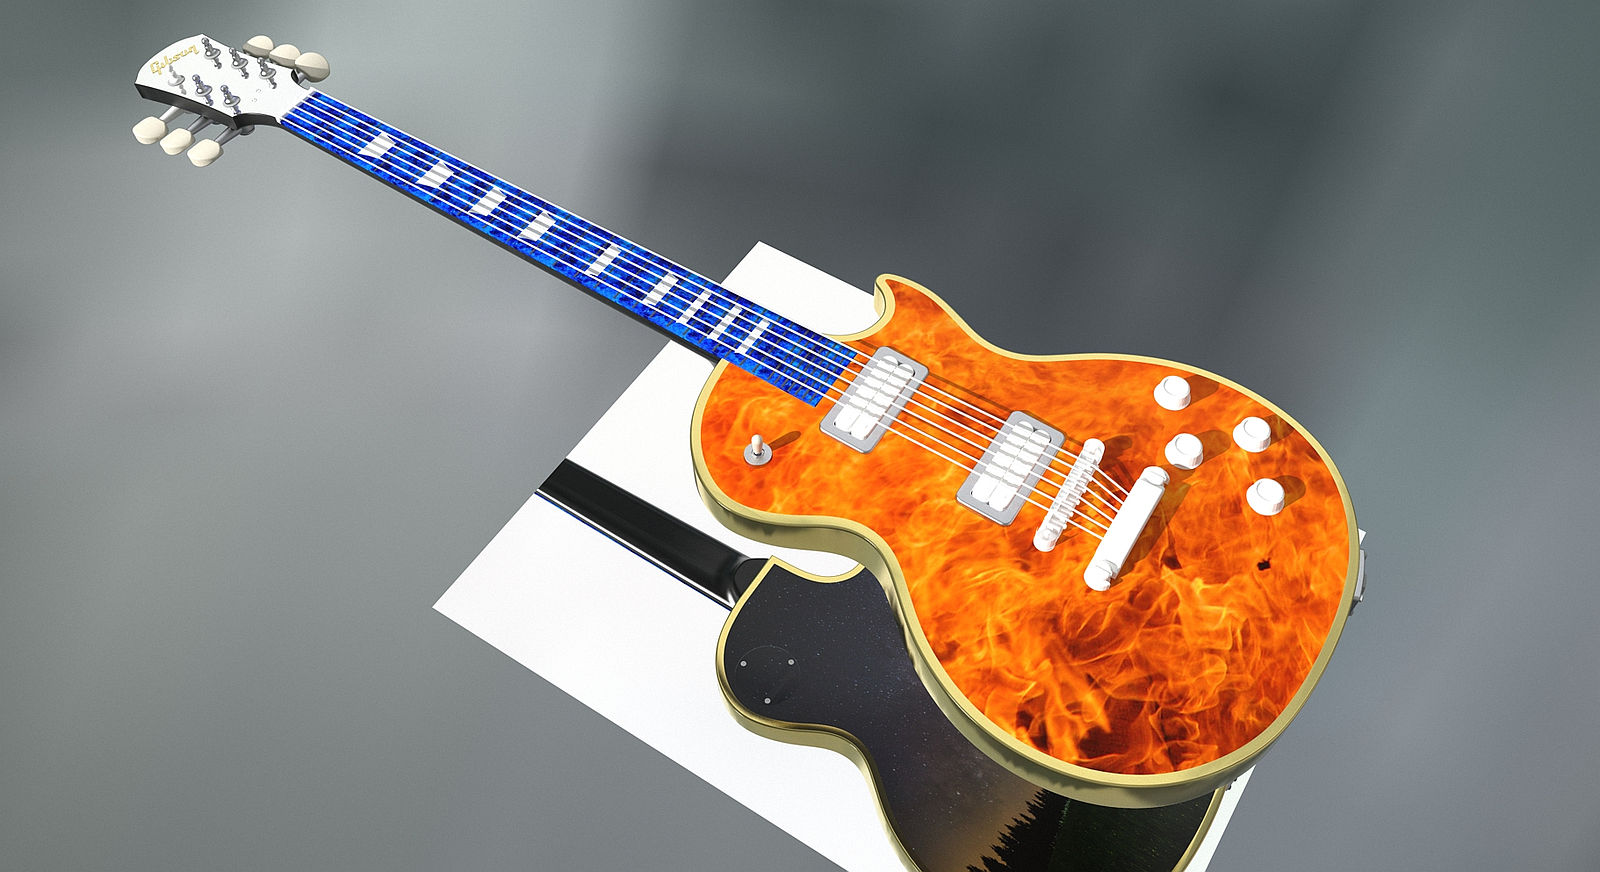 Gibson Les Paul Customised 2 9 30p 30m.jpg